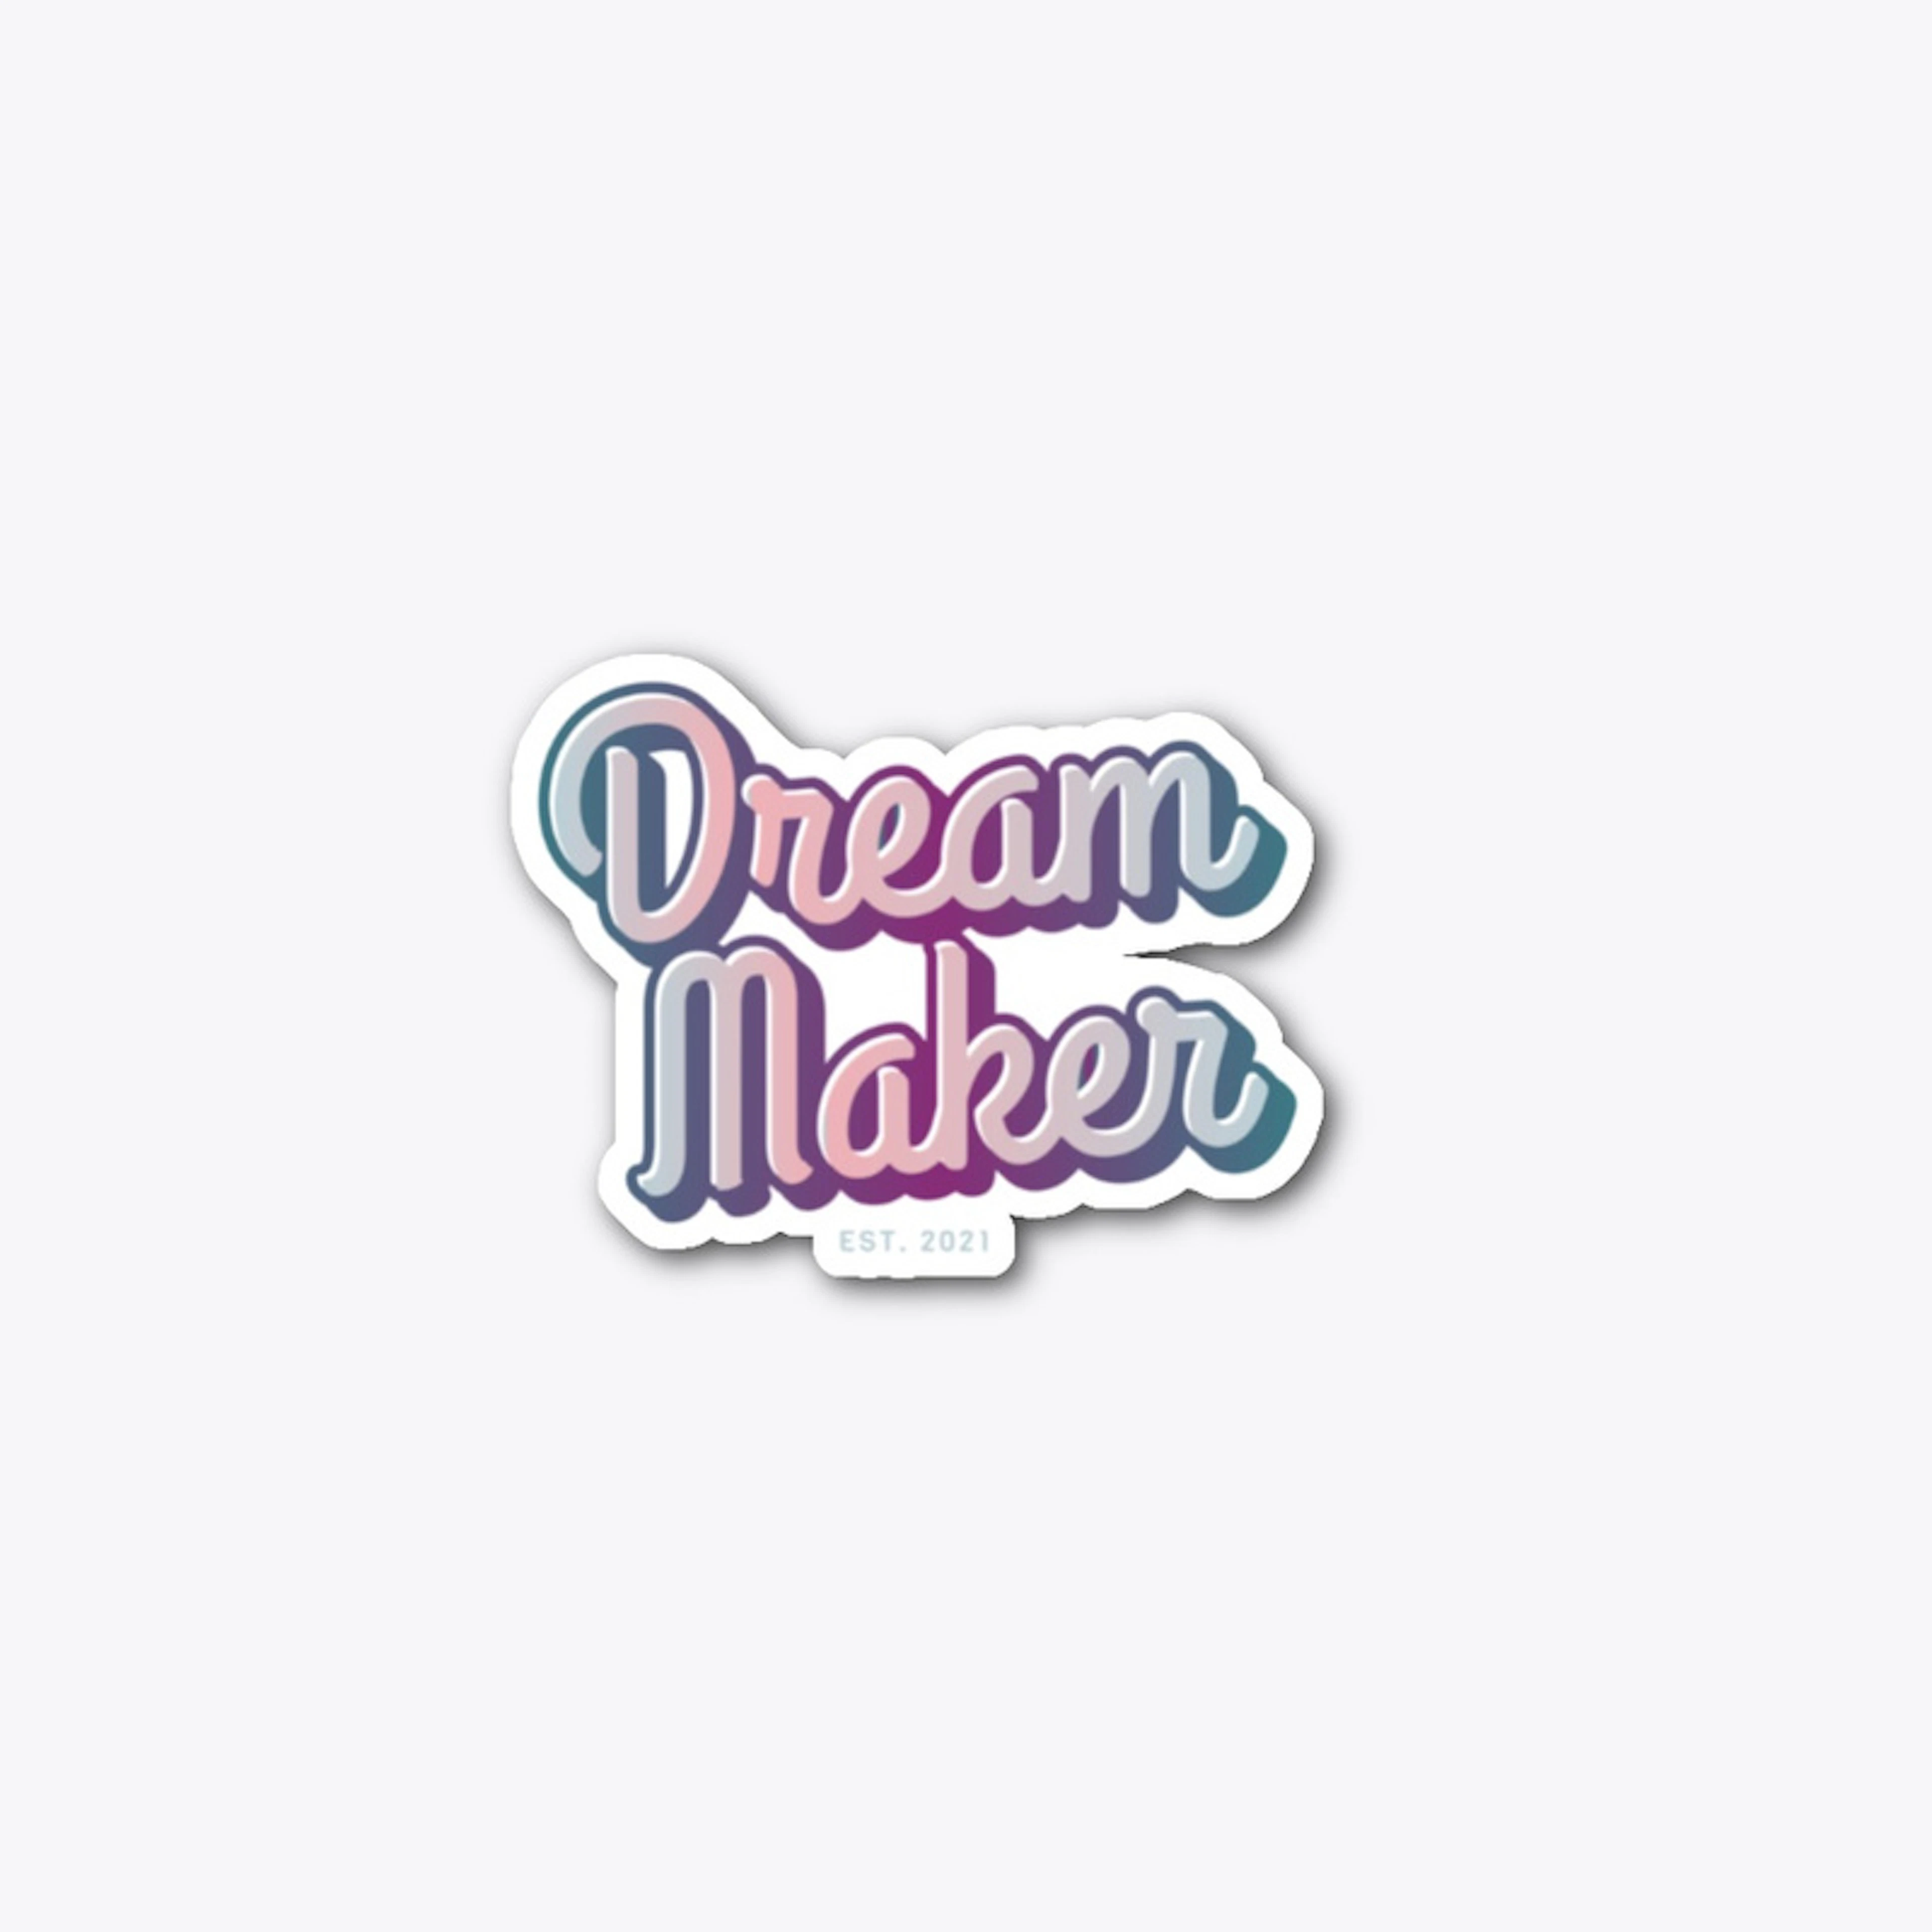 Dream Maker Est. 2021